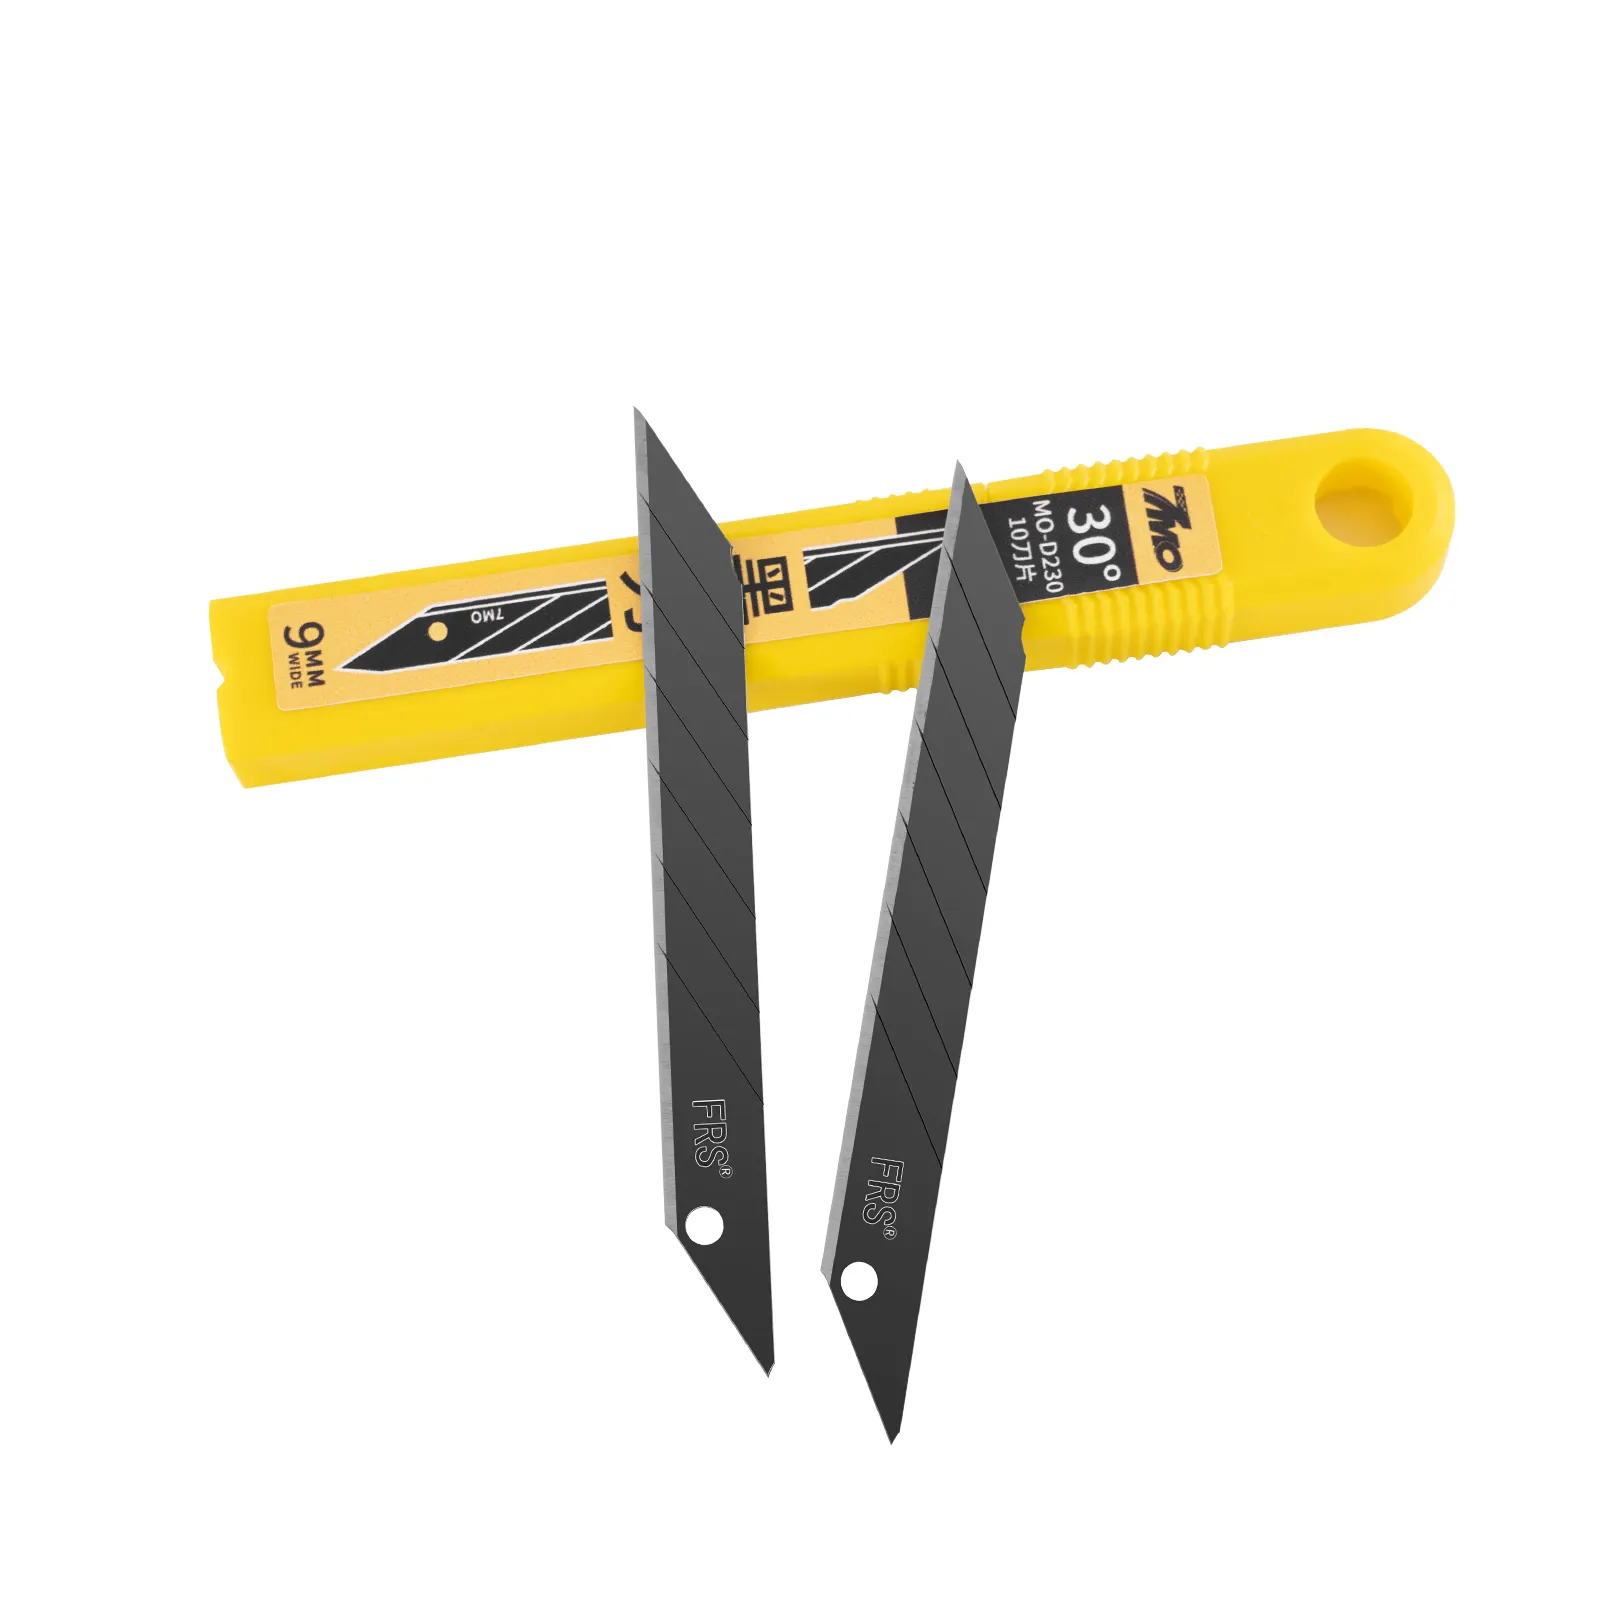 7mo arte utilitário faca artesanato vinil envoltório ferramentas papel cortador faca carro envoltório ferramentas vinil envoltório ferramentas